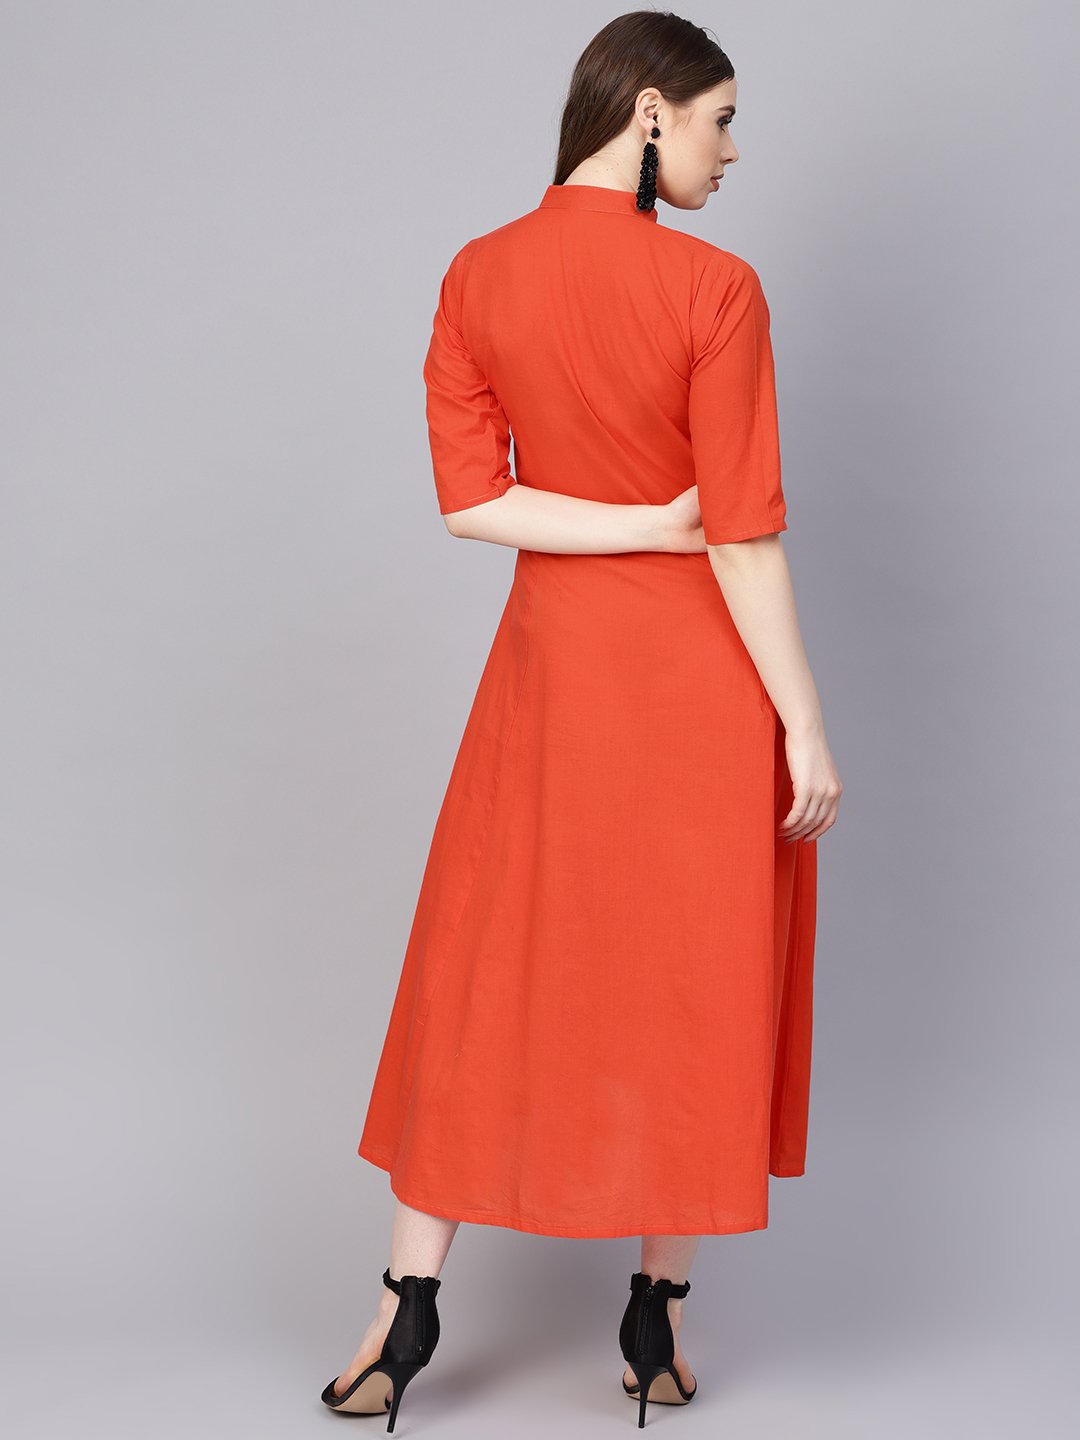 Women's Solid Orange Maxi Dress With Madarin Collar & 3/4 Sleeves - Nayo Clothing